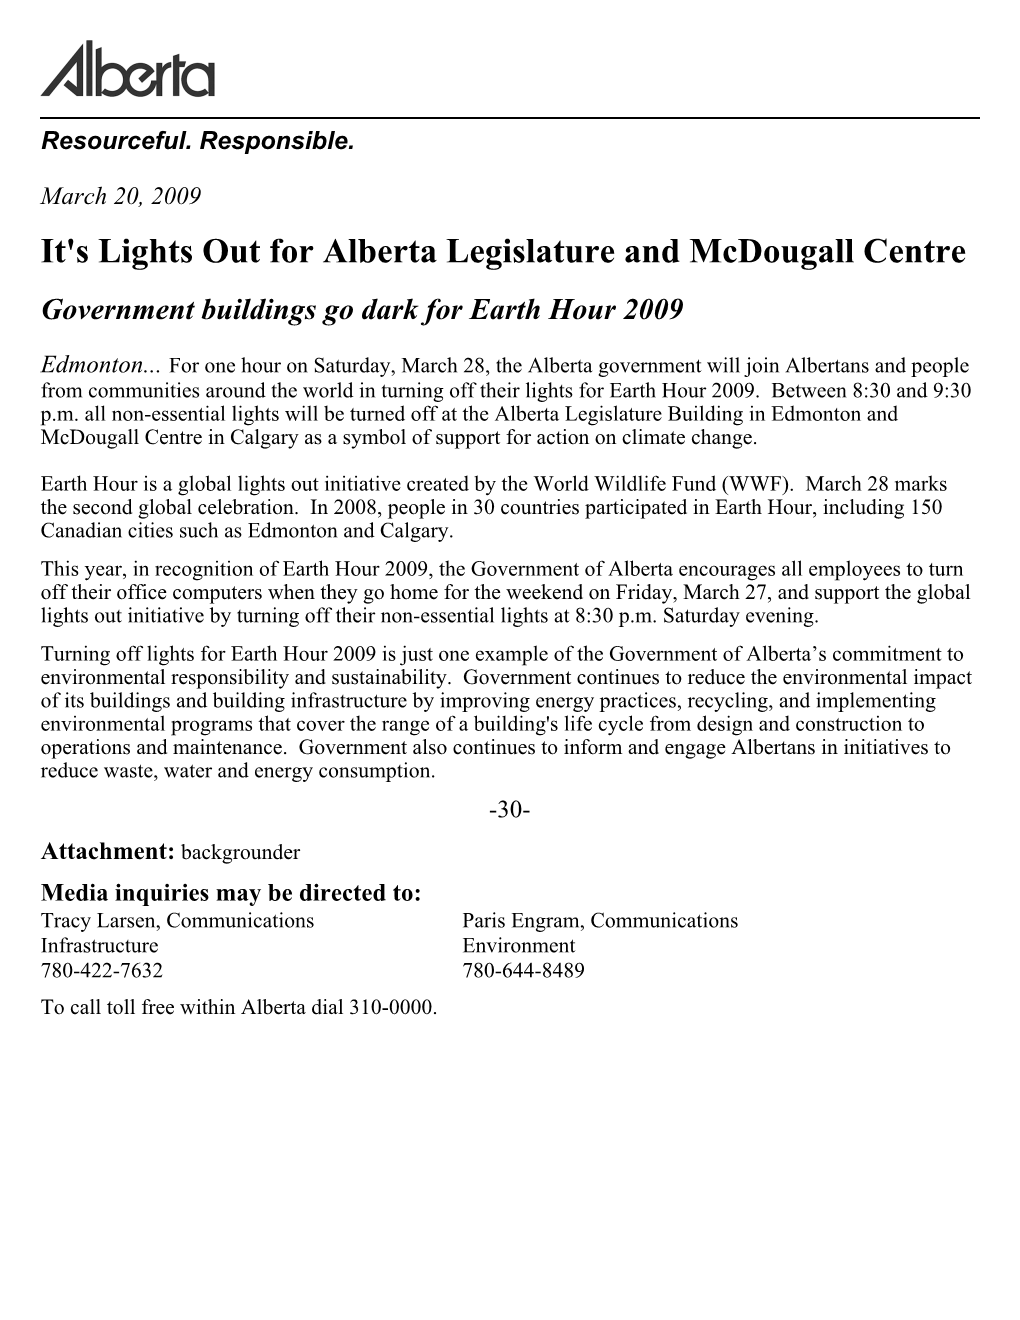 Alberta Legislature and Mcdougall Centre Government Buildings Go Dark for Earth Hour 2009